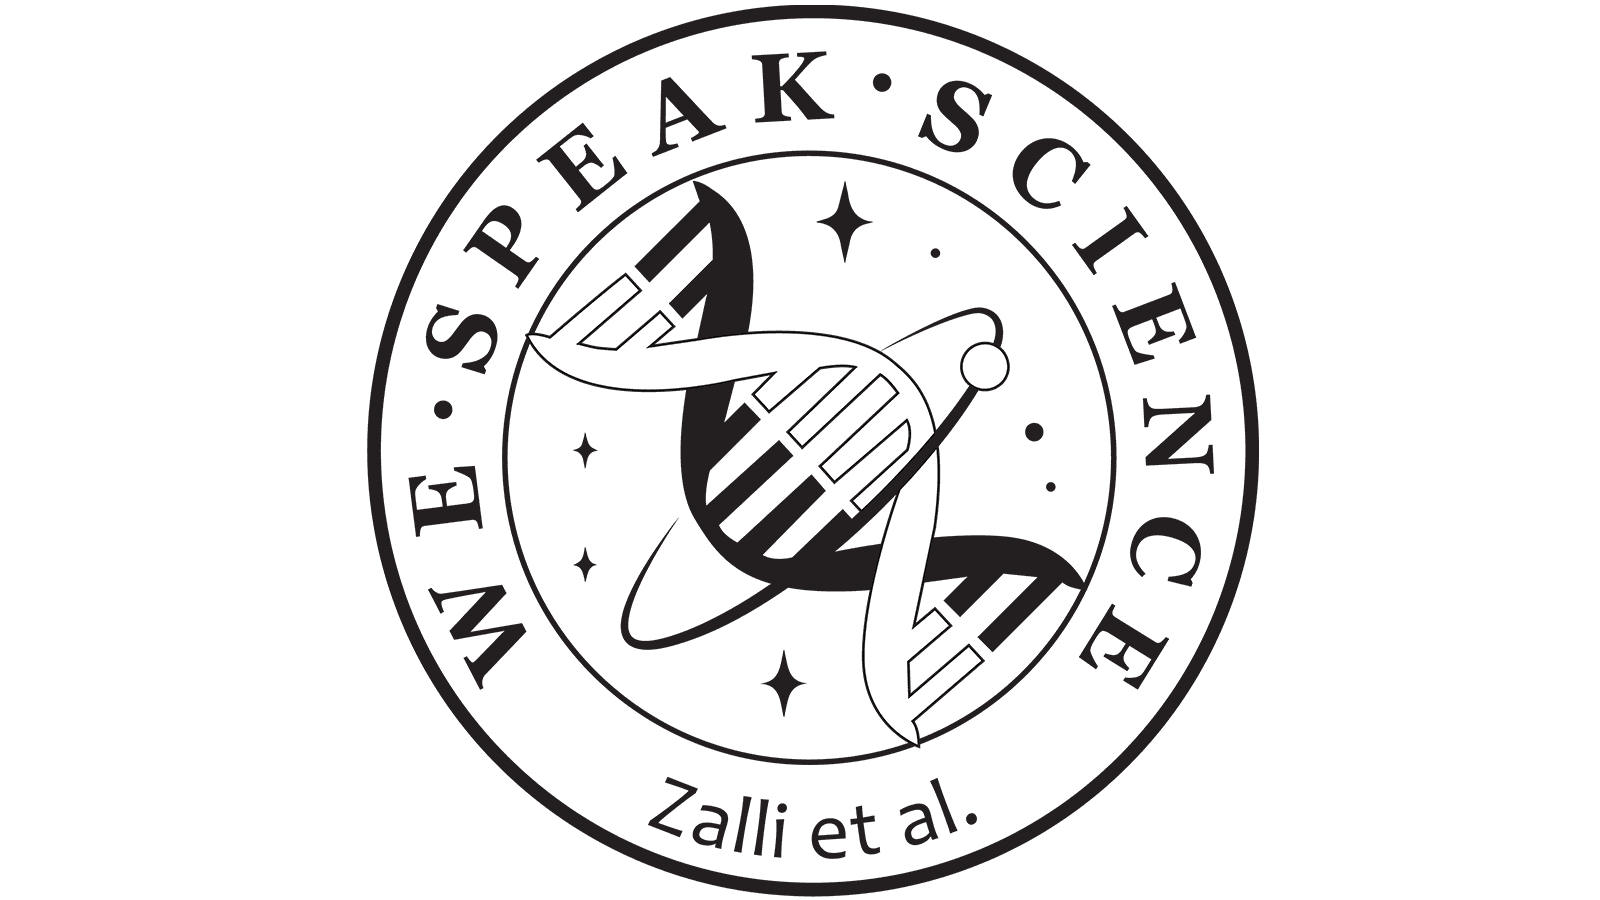 We speak science logo